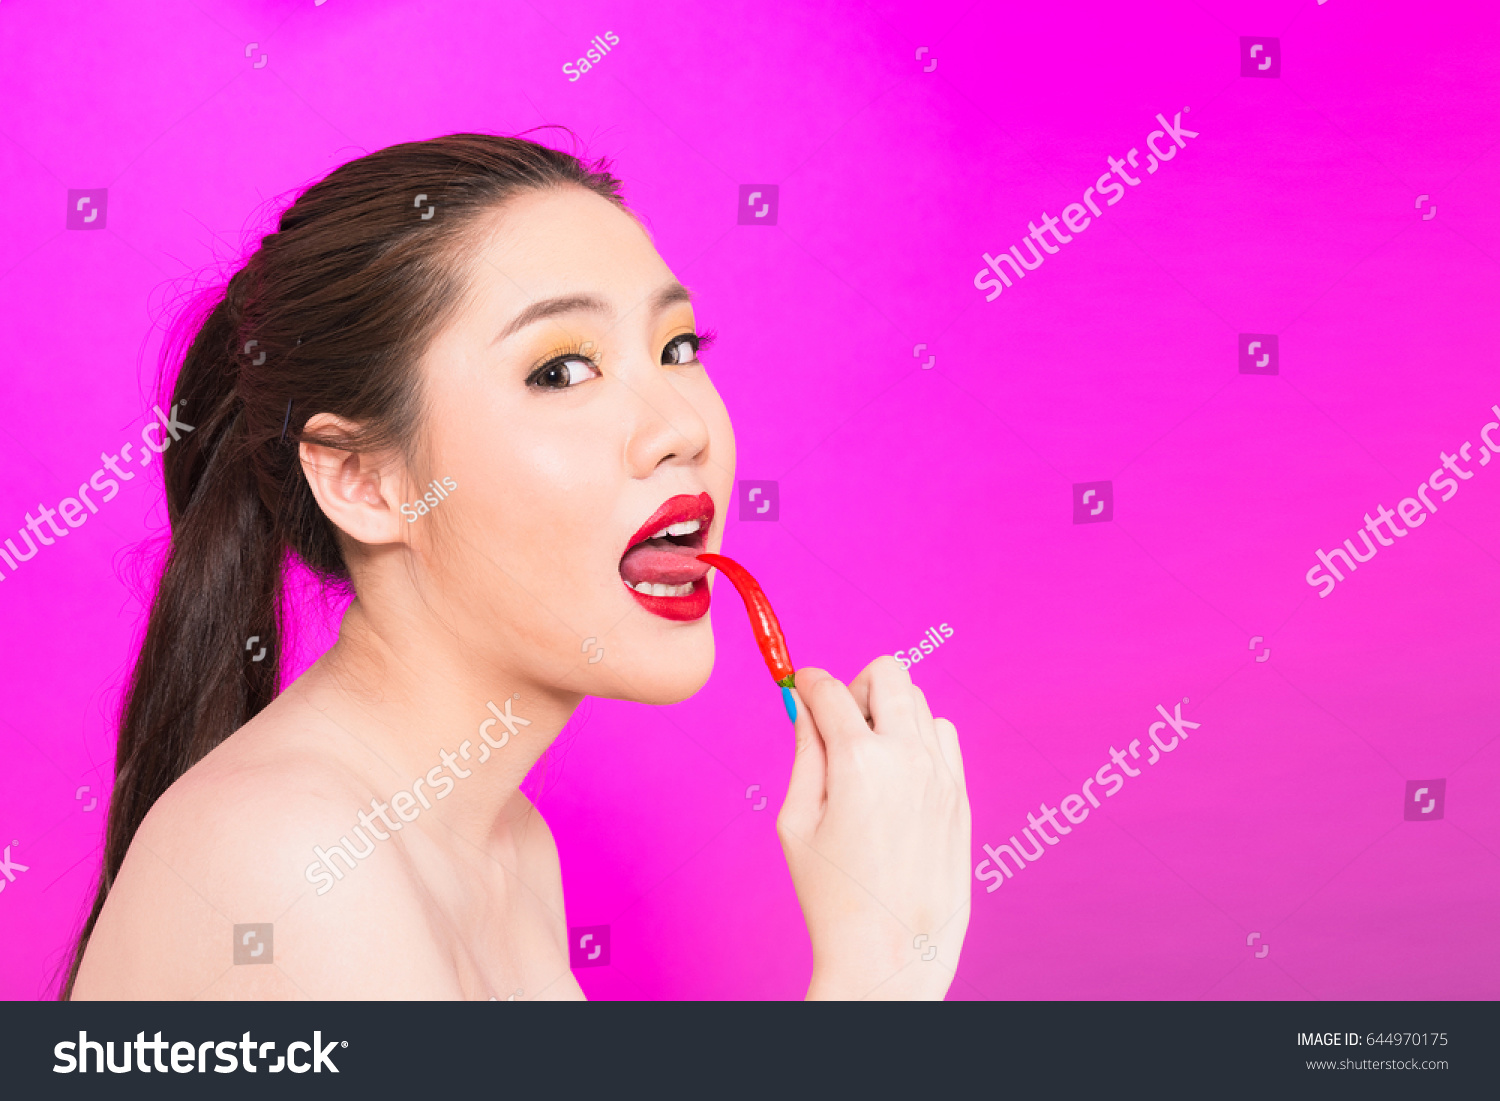 Asian Licking